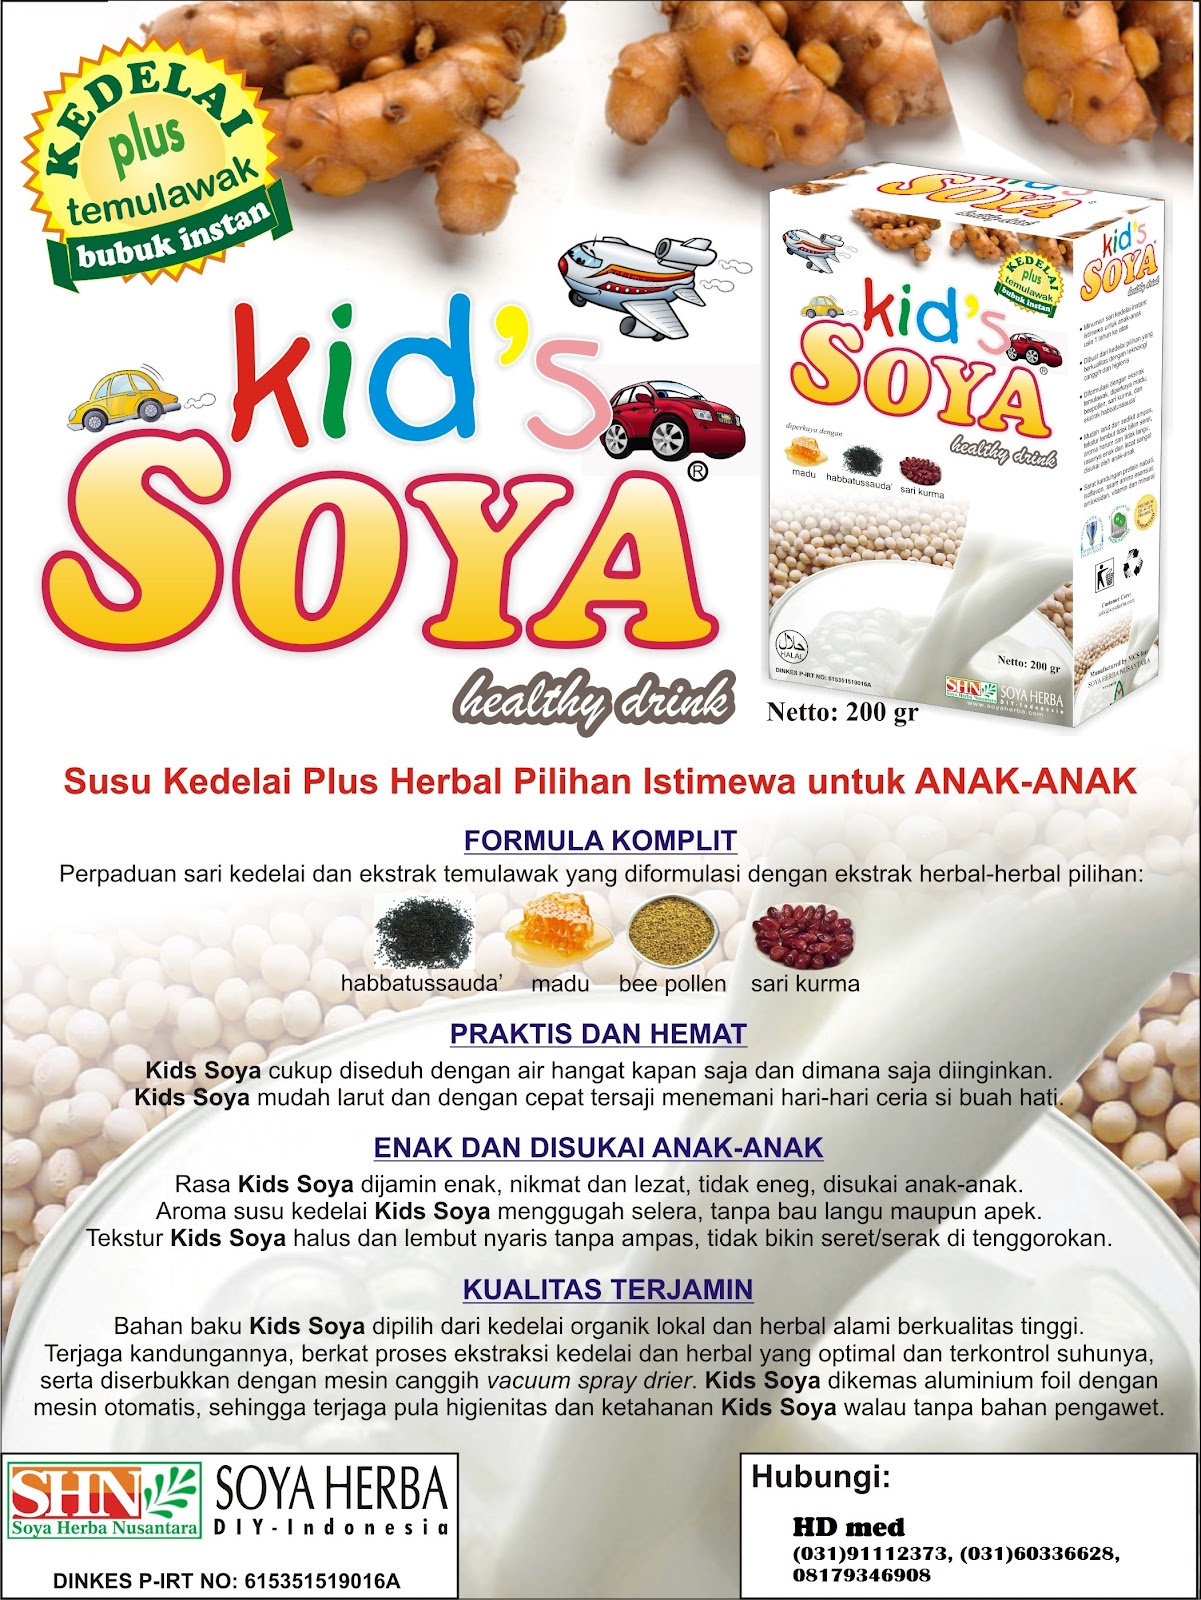 HD MED: soy milk, mamasoya and kid's soya